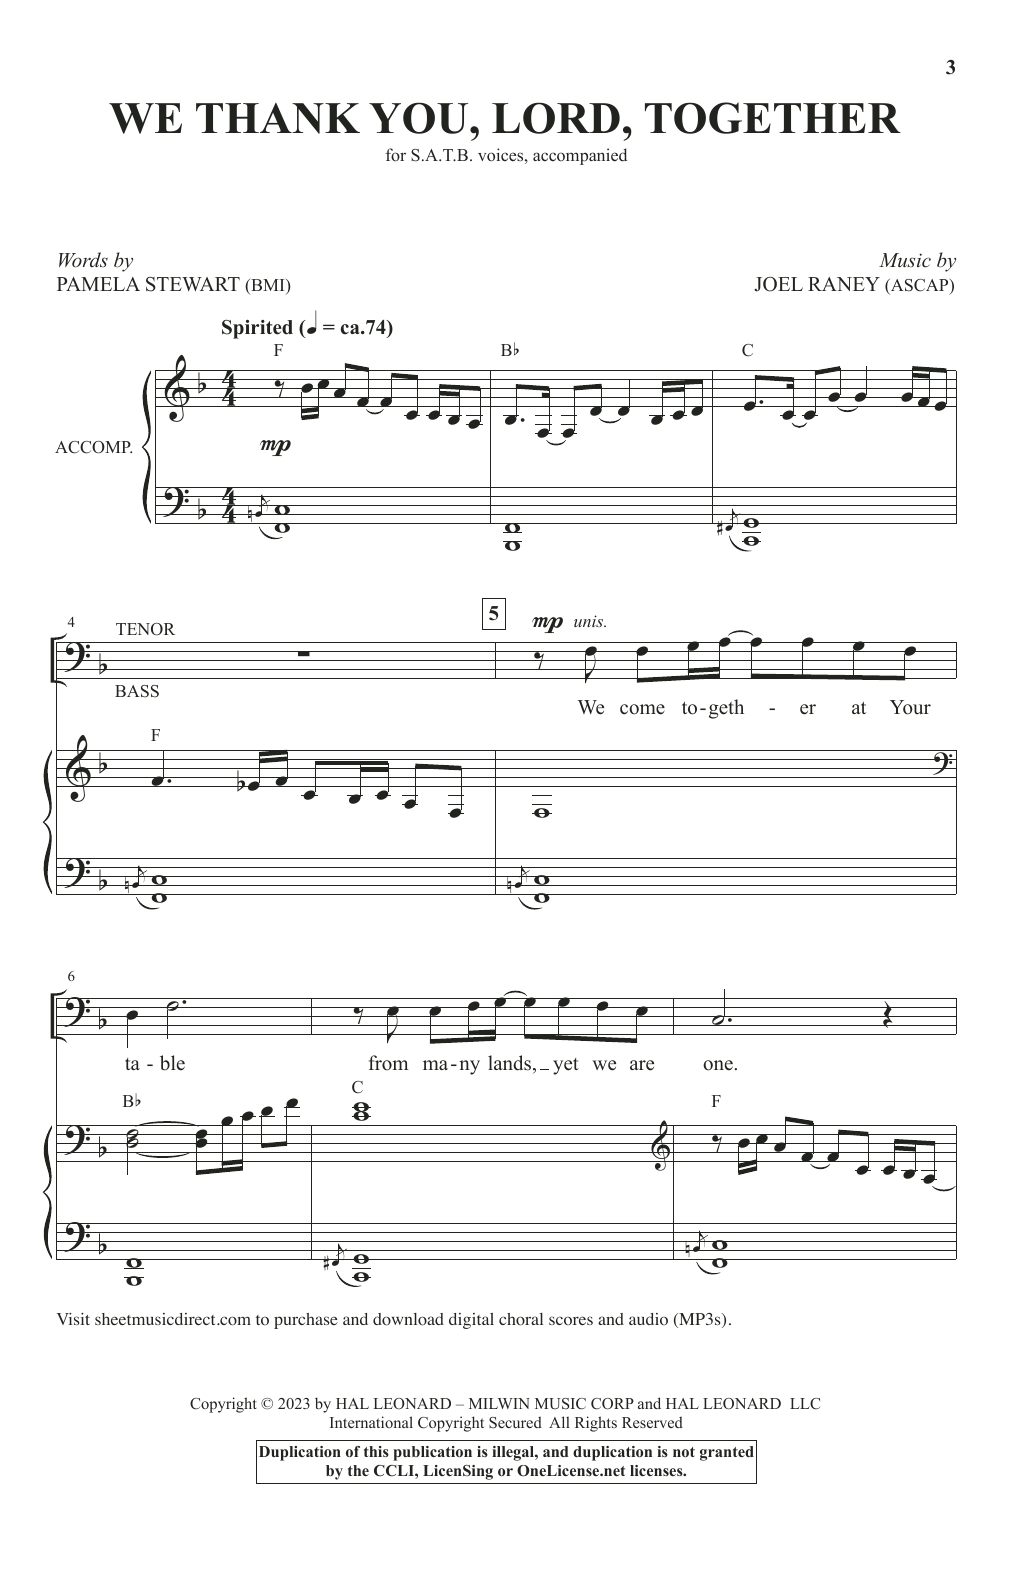 Pamela Stewart & Joel Raney We Thank You, Lord, Together Sheet Music Notes & Chords for SATB Choir - Download or Print PDF